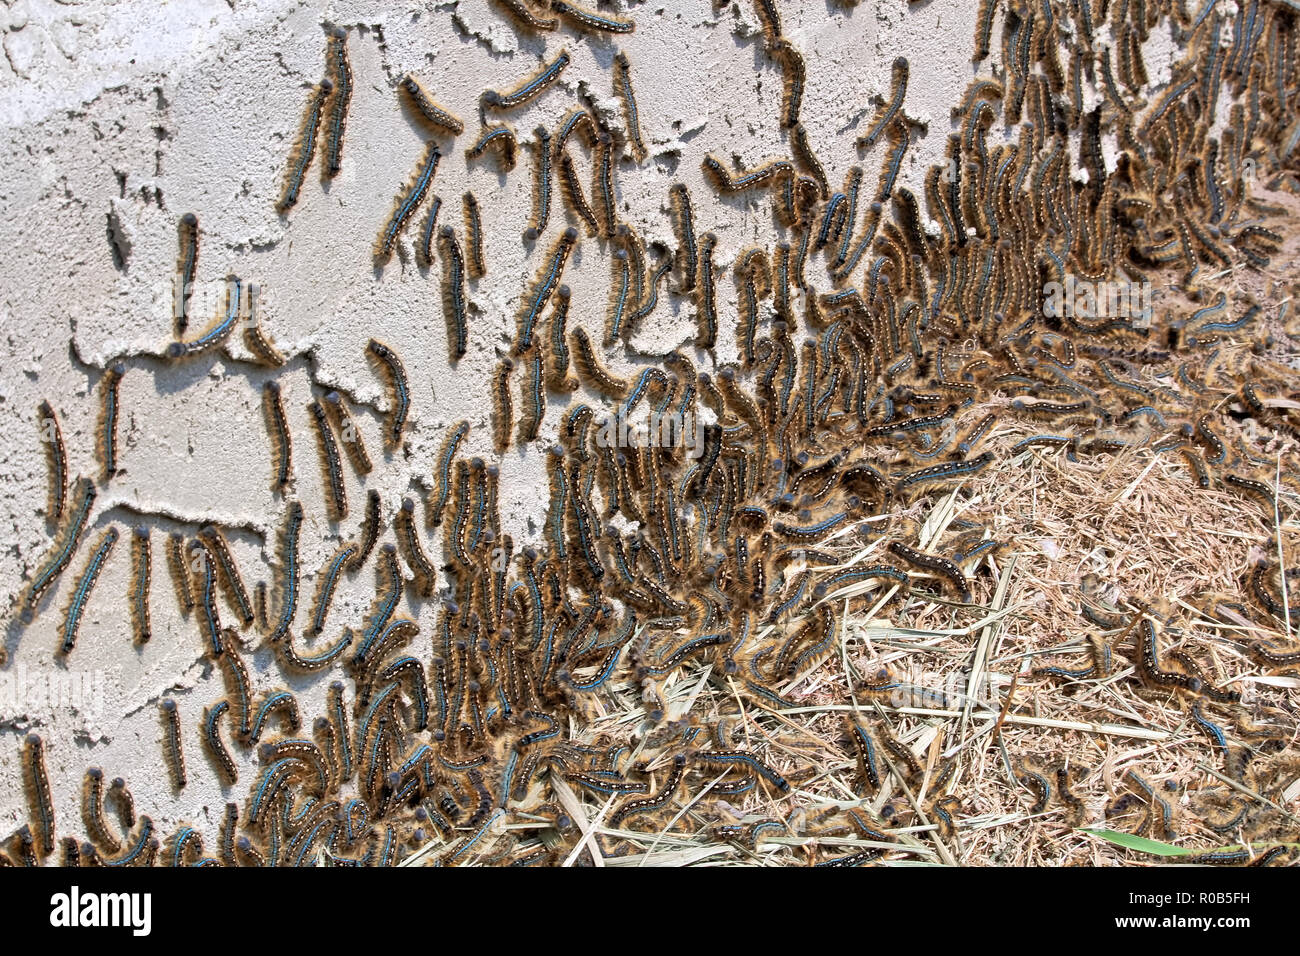 Tent caterpillars climb the edge of a stucco wall Stock Photo - Alamy